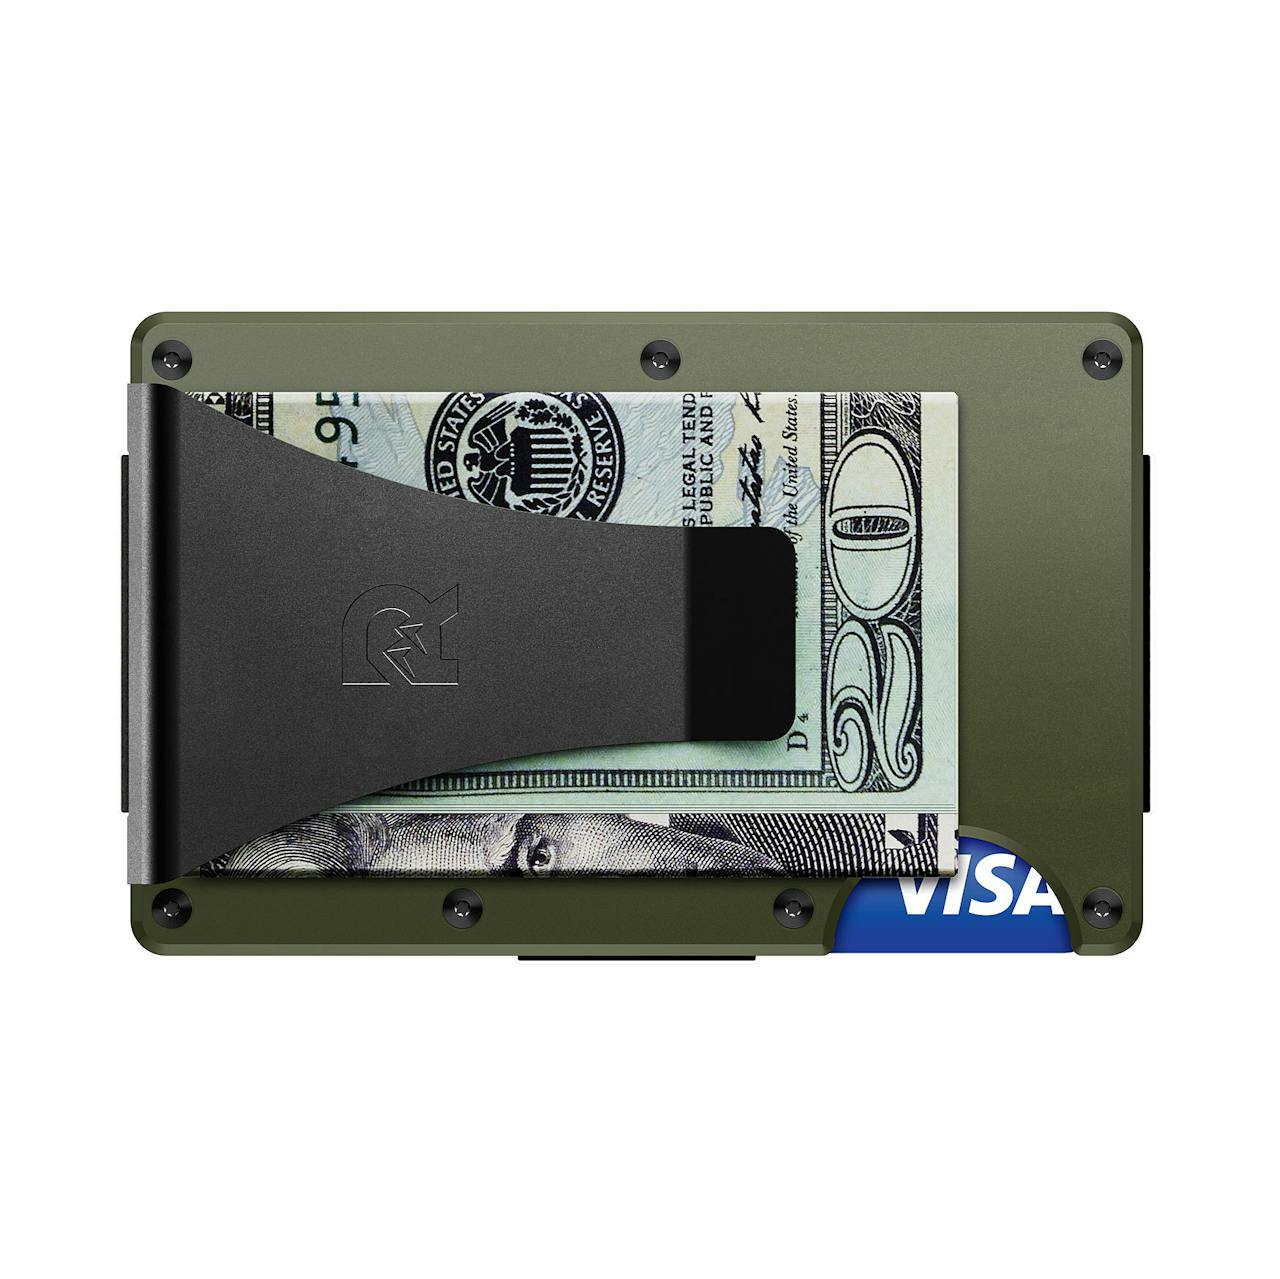 The Ridge Aluminum Wallet + Money Clip